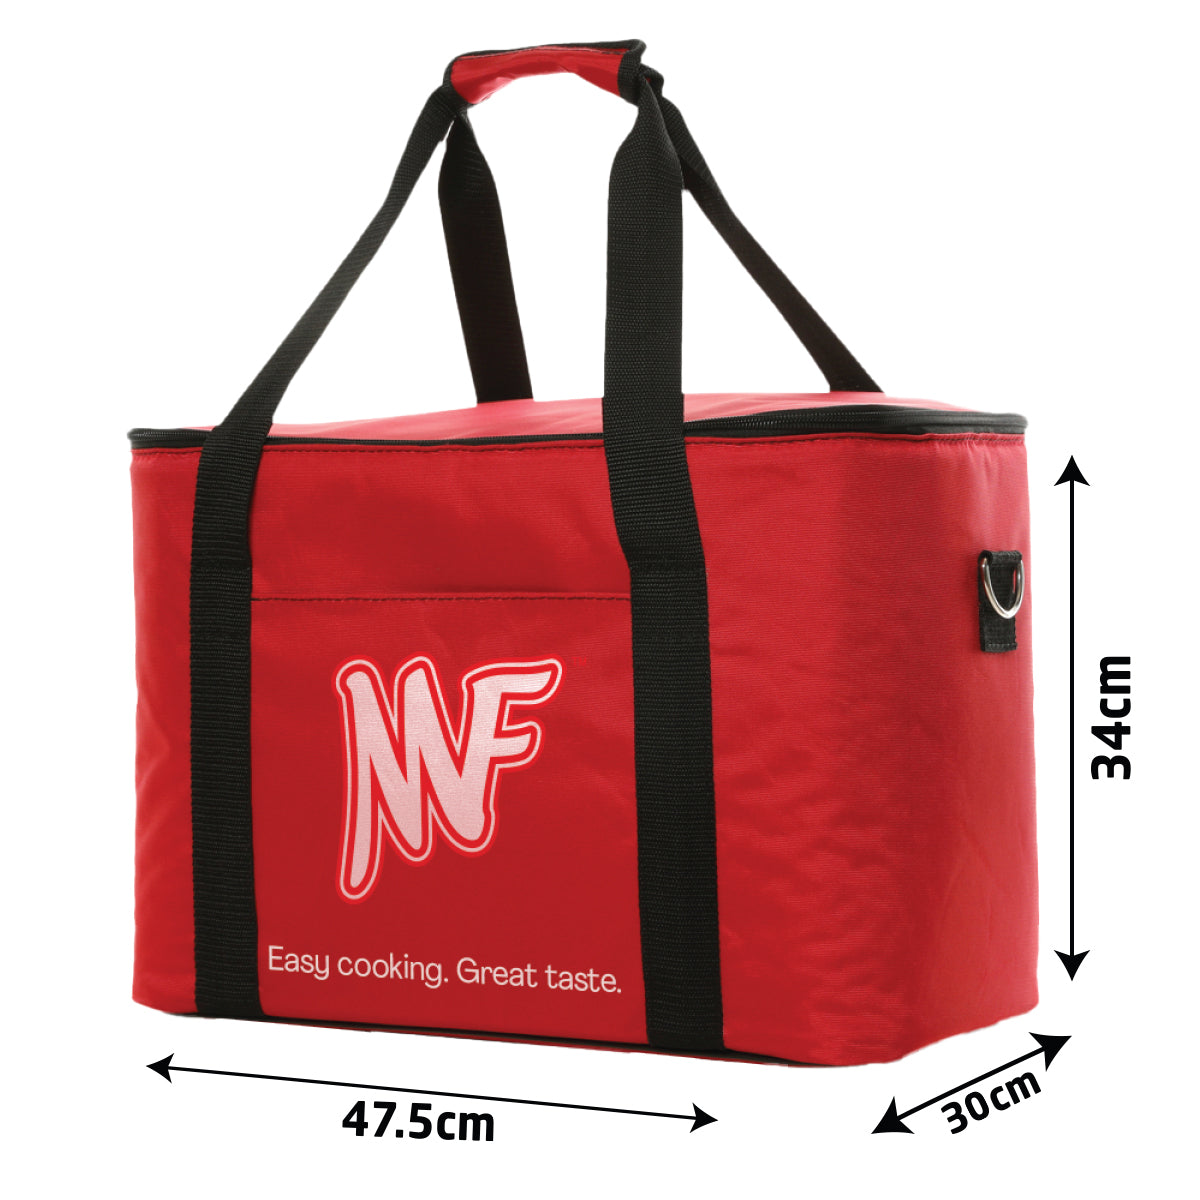 MF Food Storage Bag